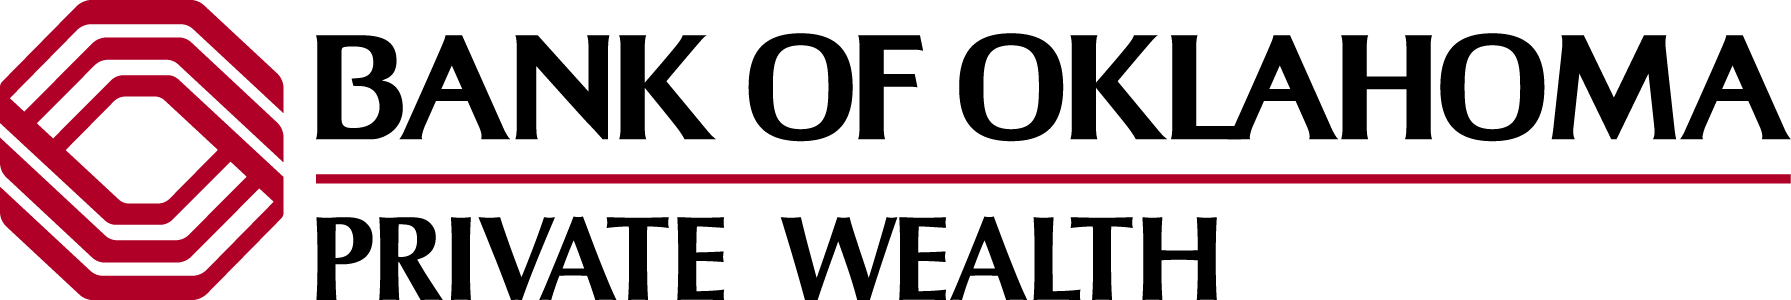 Logo de Bank of Oklahoma Patrimonio privado